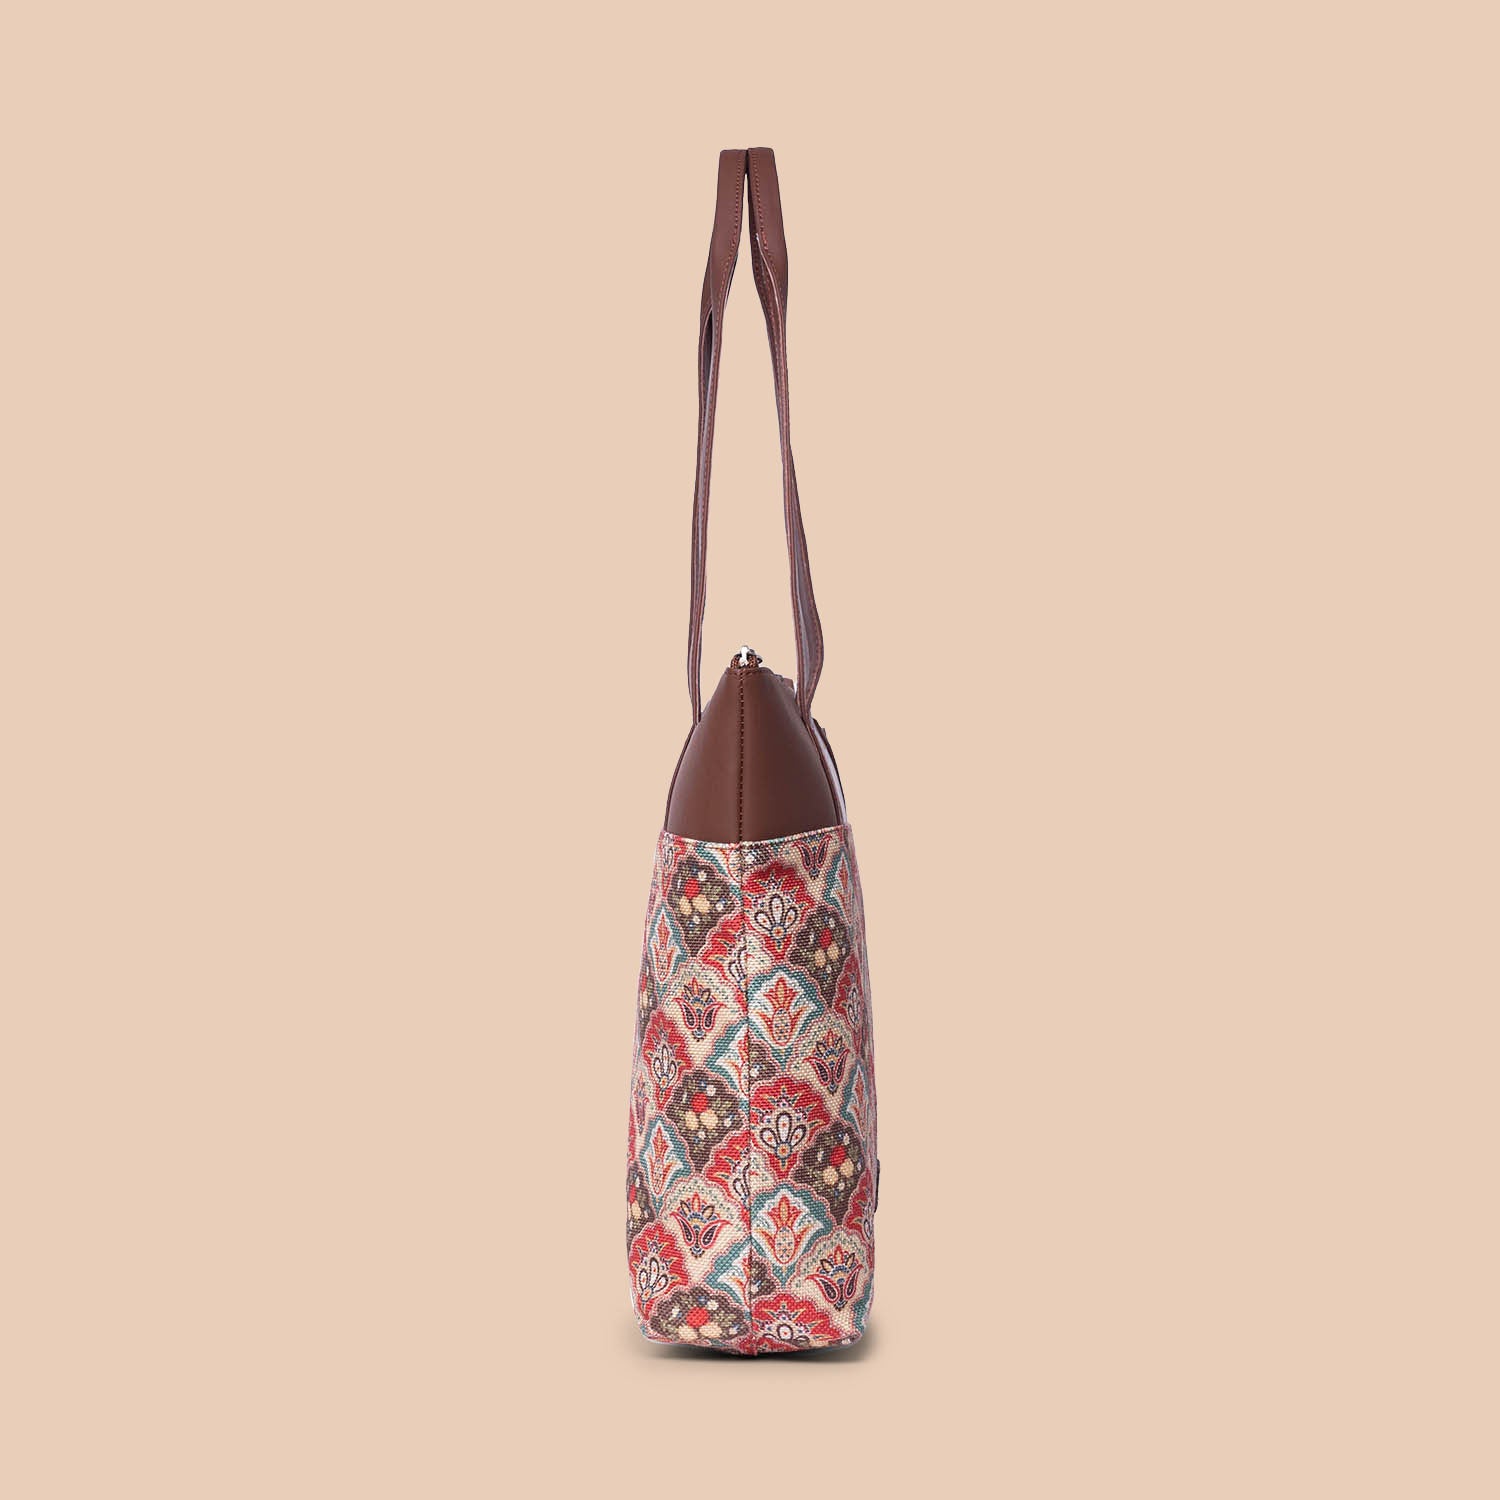 Mughal Garden Print & Mughal Art Multicolor - Women's Office Bag & Everyday Tote Bag Combo